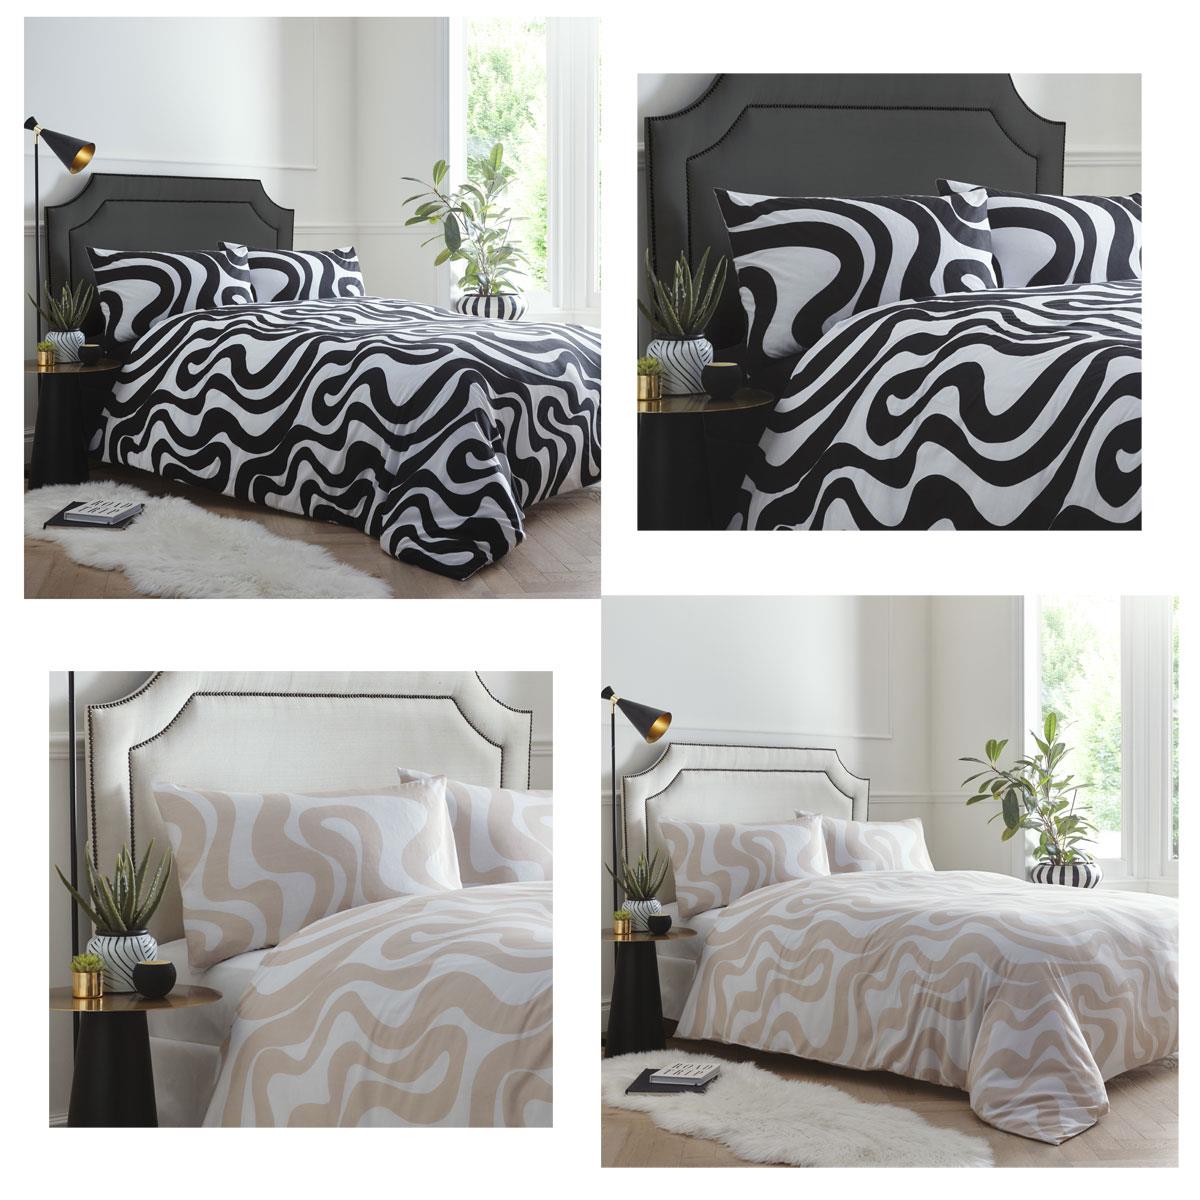 Duvet set bedding bed quilt cover pillow cases natural / black white